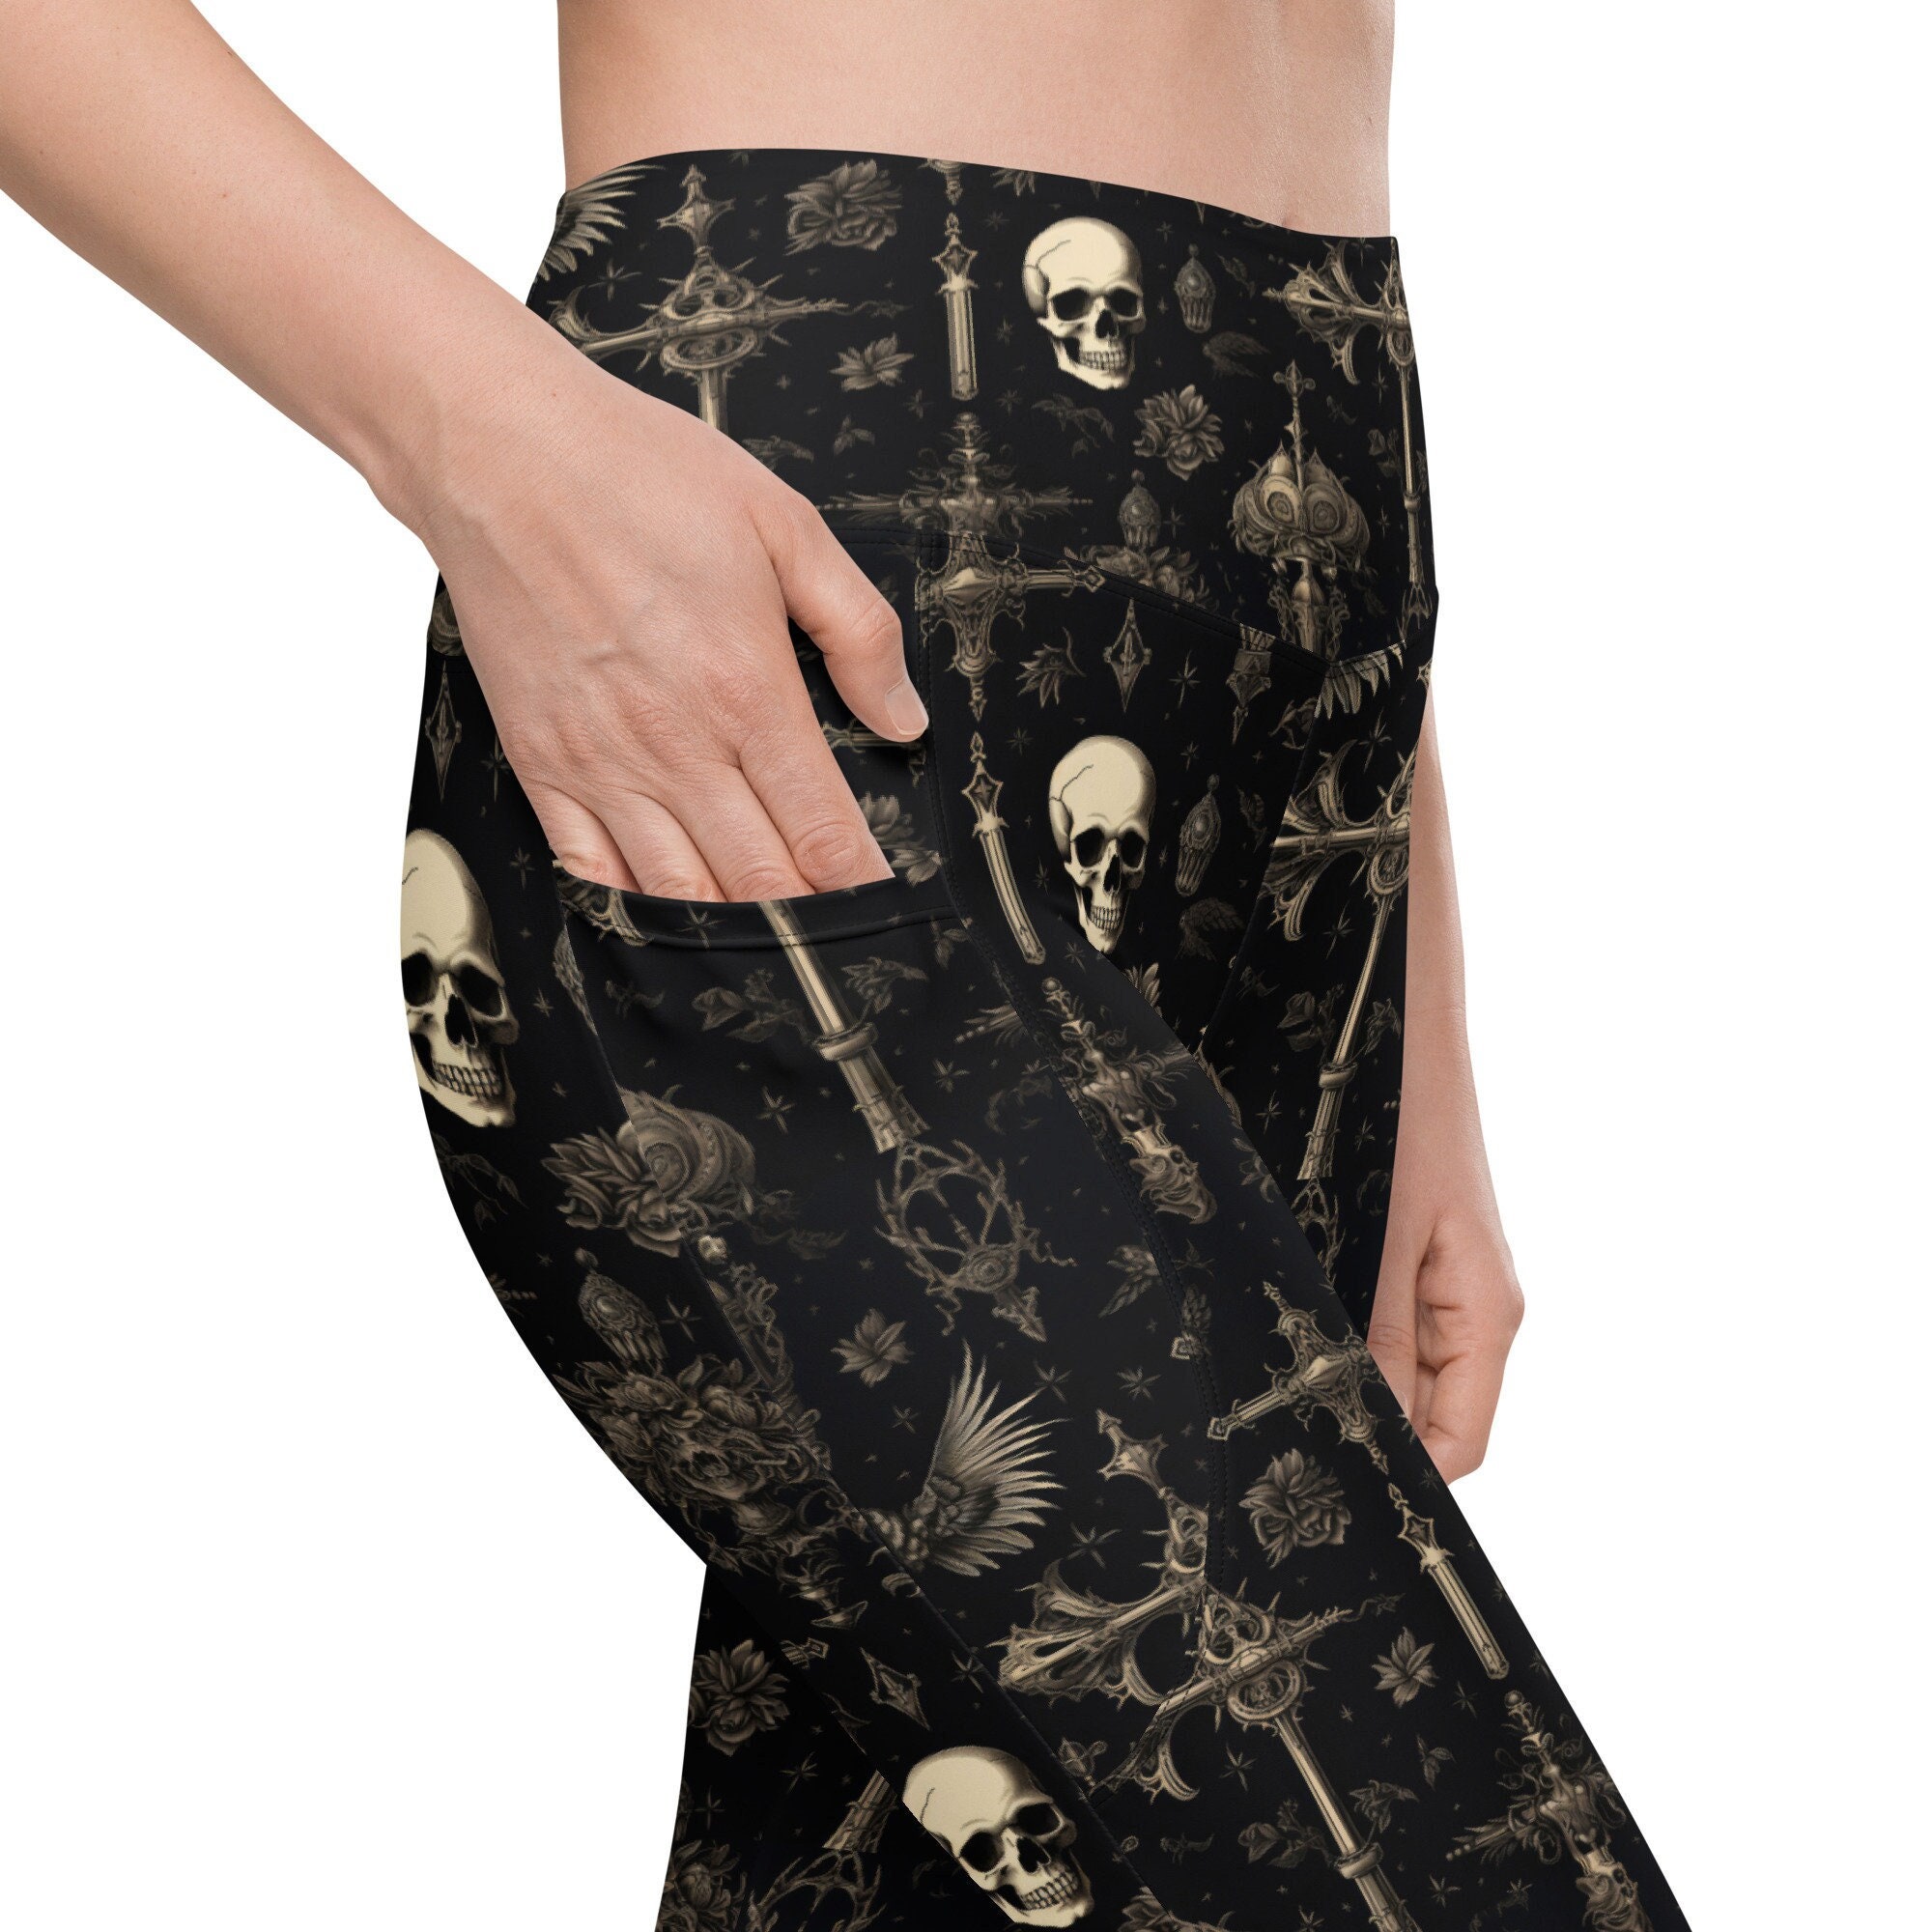 Split Plaid Leggings With Pockets, Plus Sizes, Goth Clothing